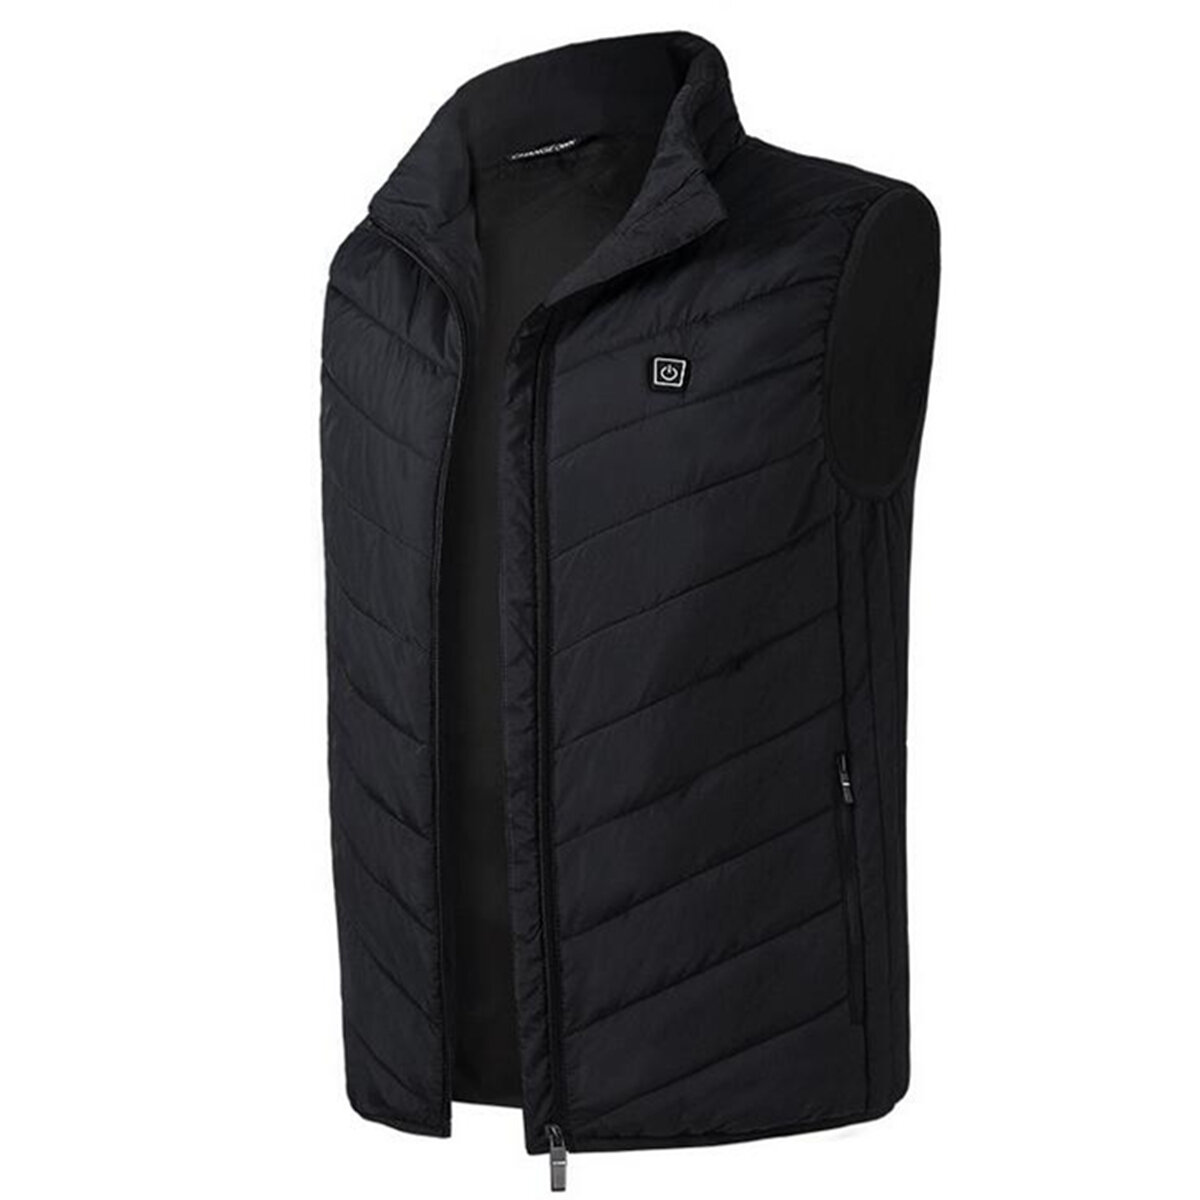 Electric Heated Vest Waistcoat Cloth Jacket USB Thermal Warm Winter Body Warmer